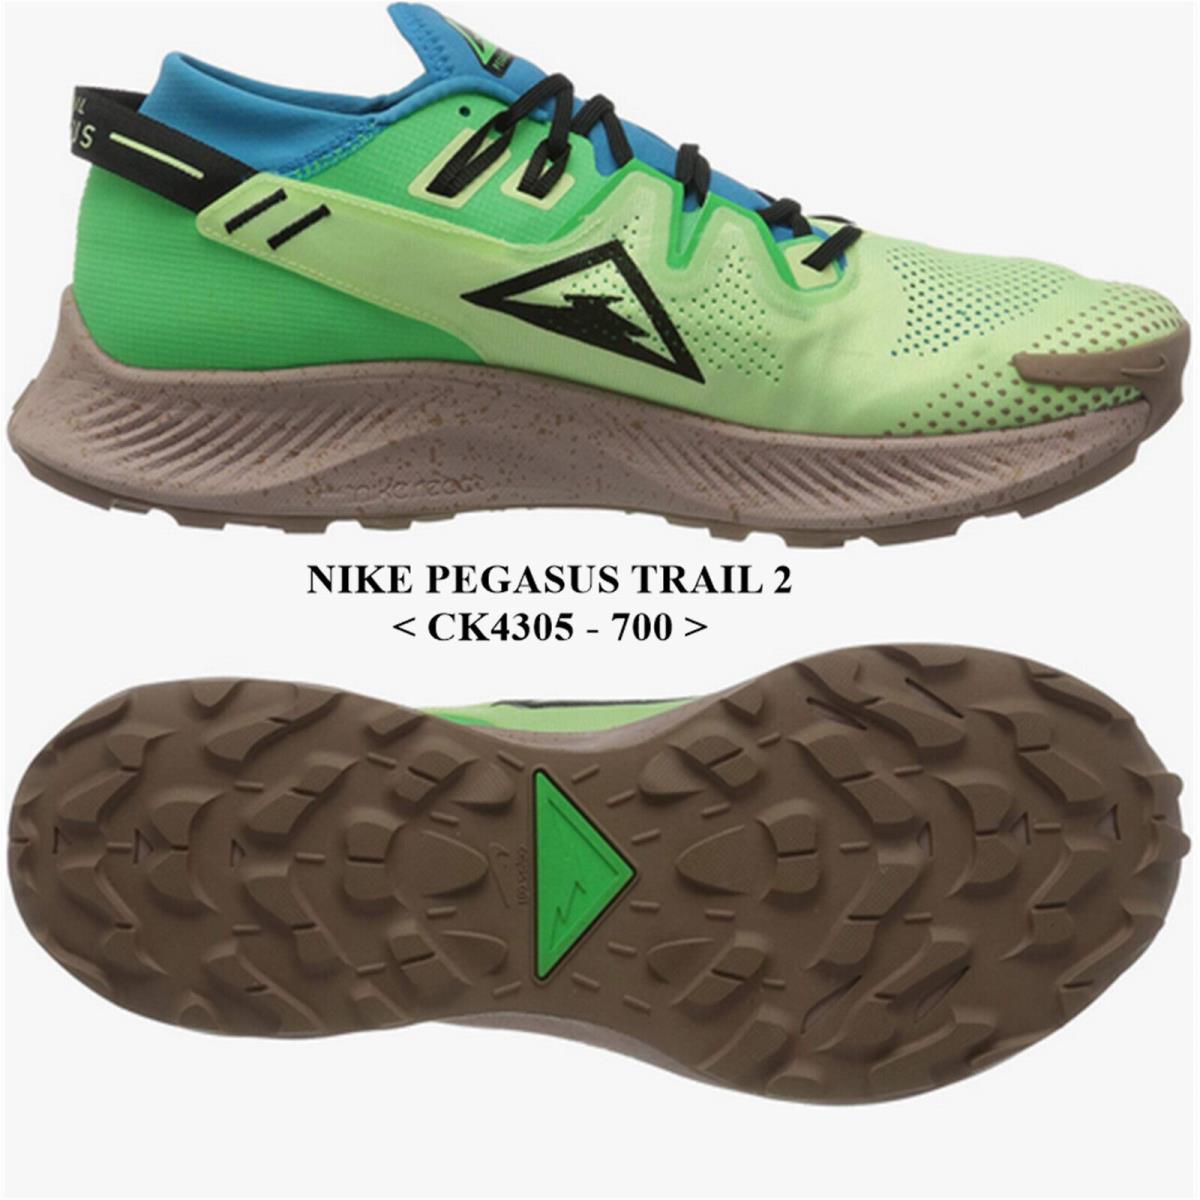 Nike Pegasus Trail 2 CK4305-700 Men`s Running Shoes - Green and Blue